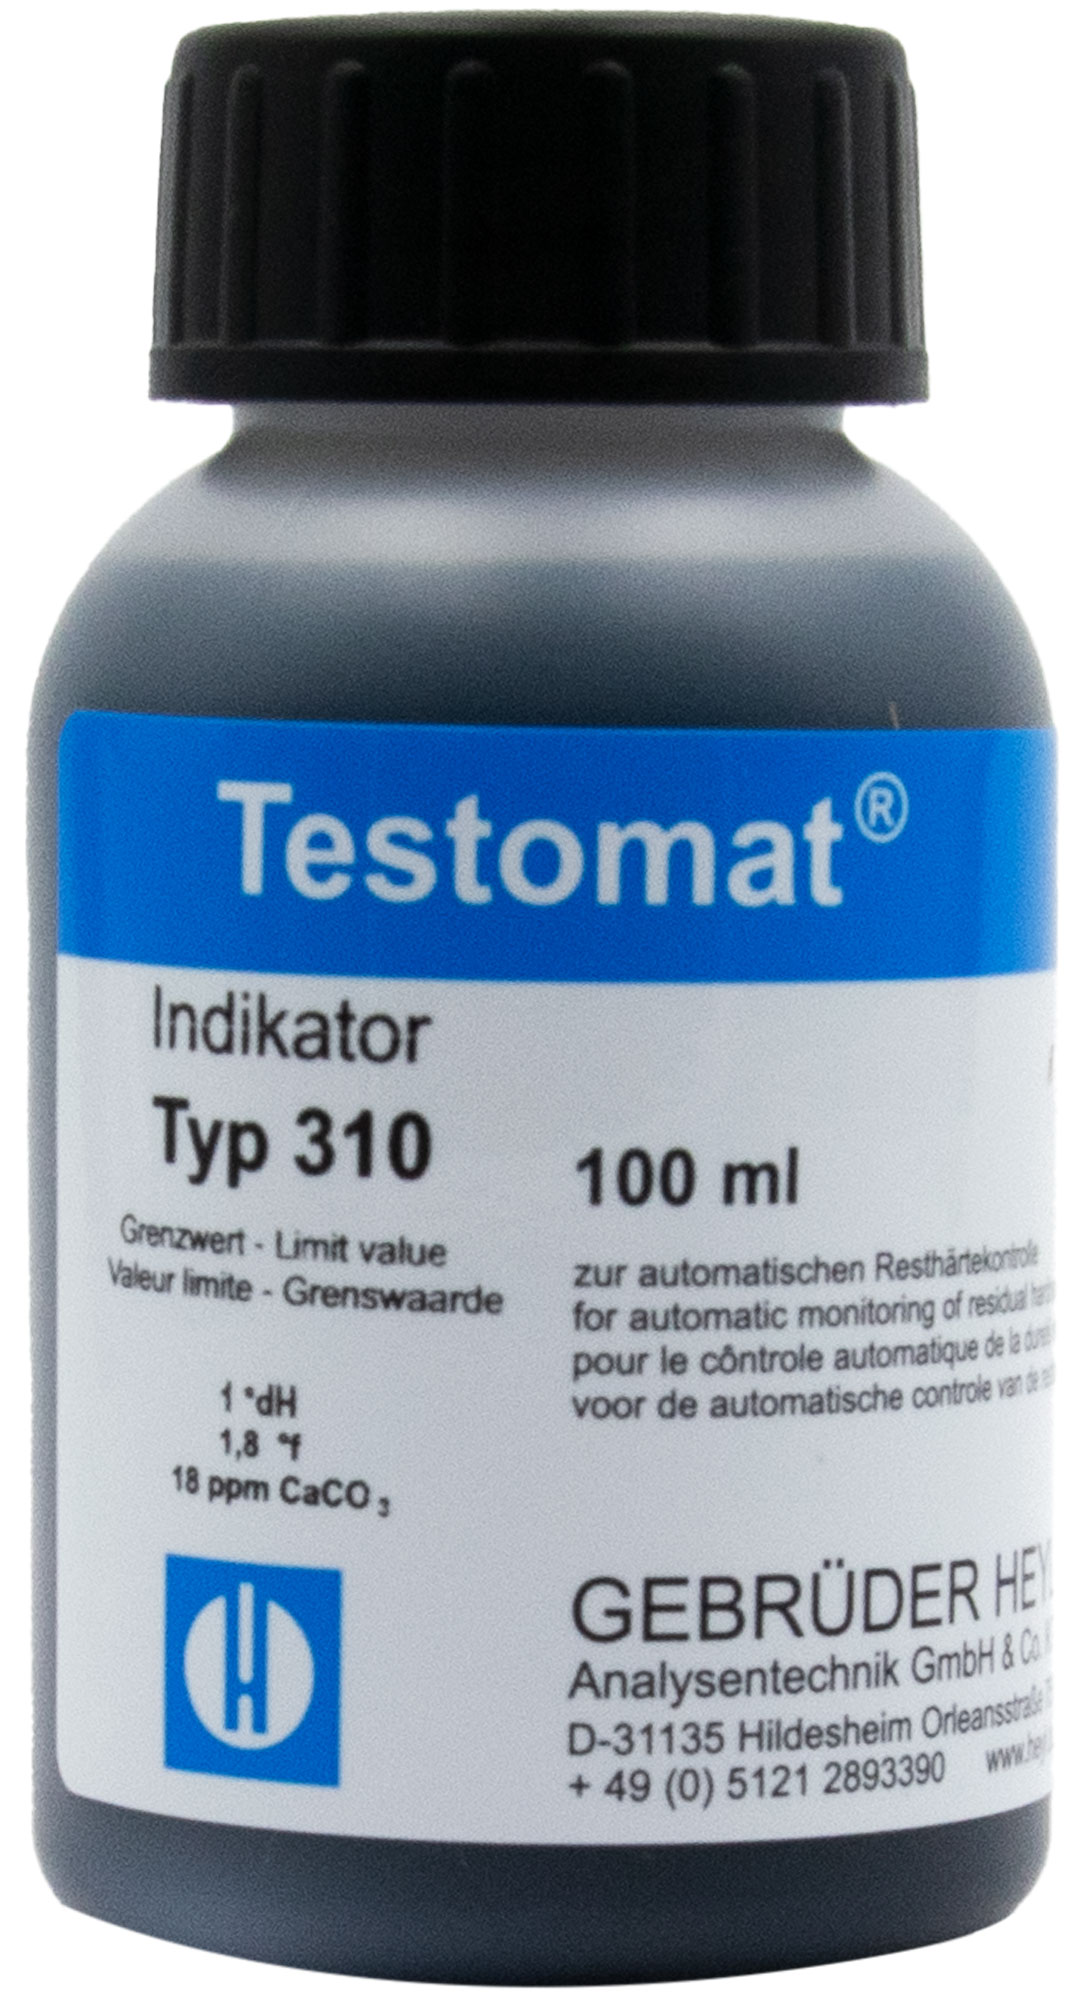 Testomat® 808 indicator 310 2 x 100 ml